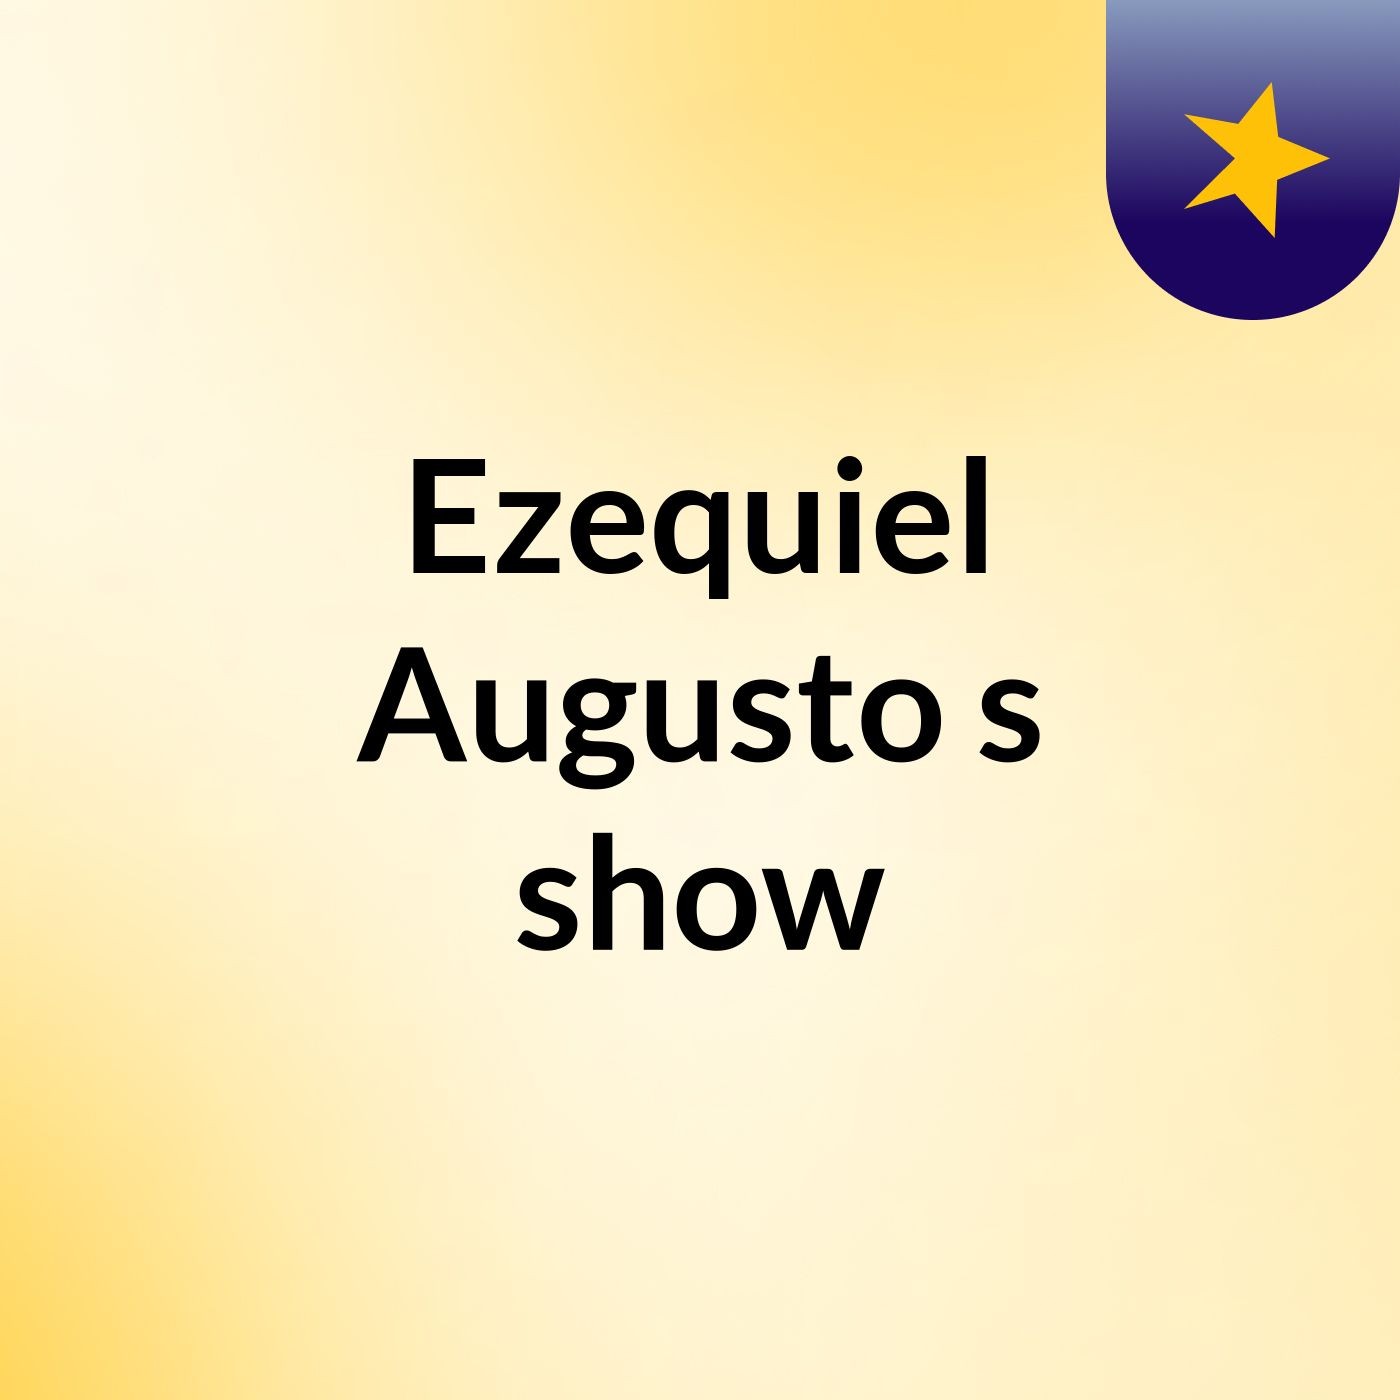 Ezequiel Augusto's show